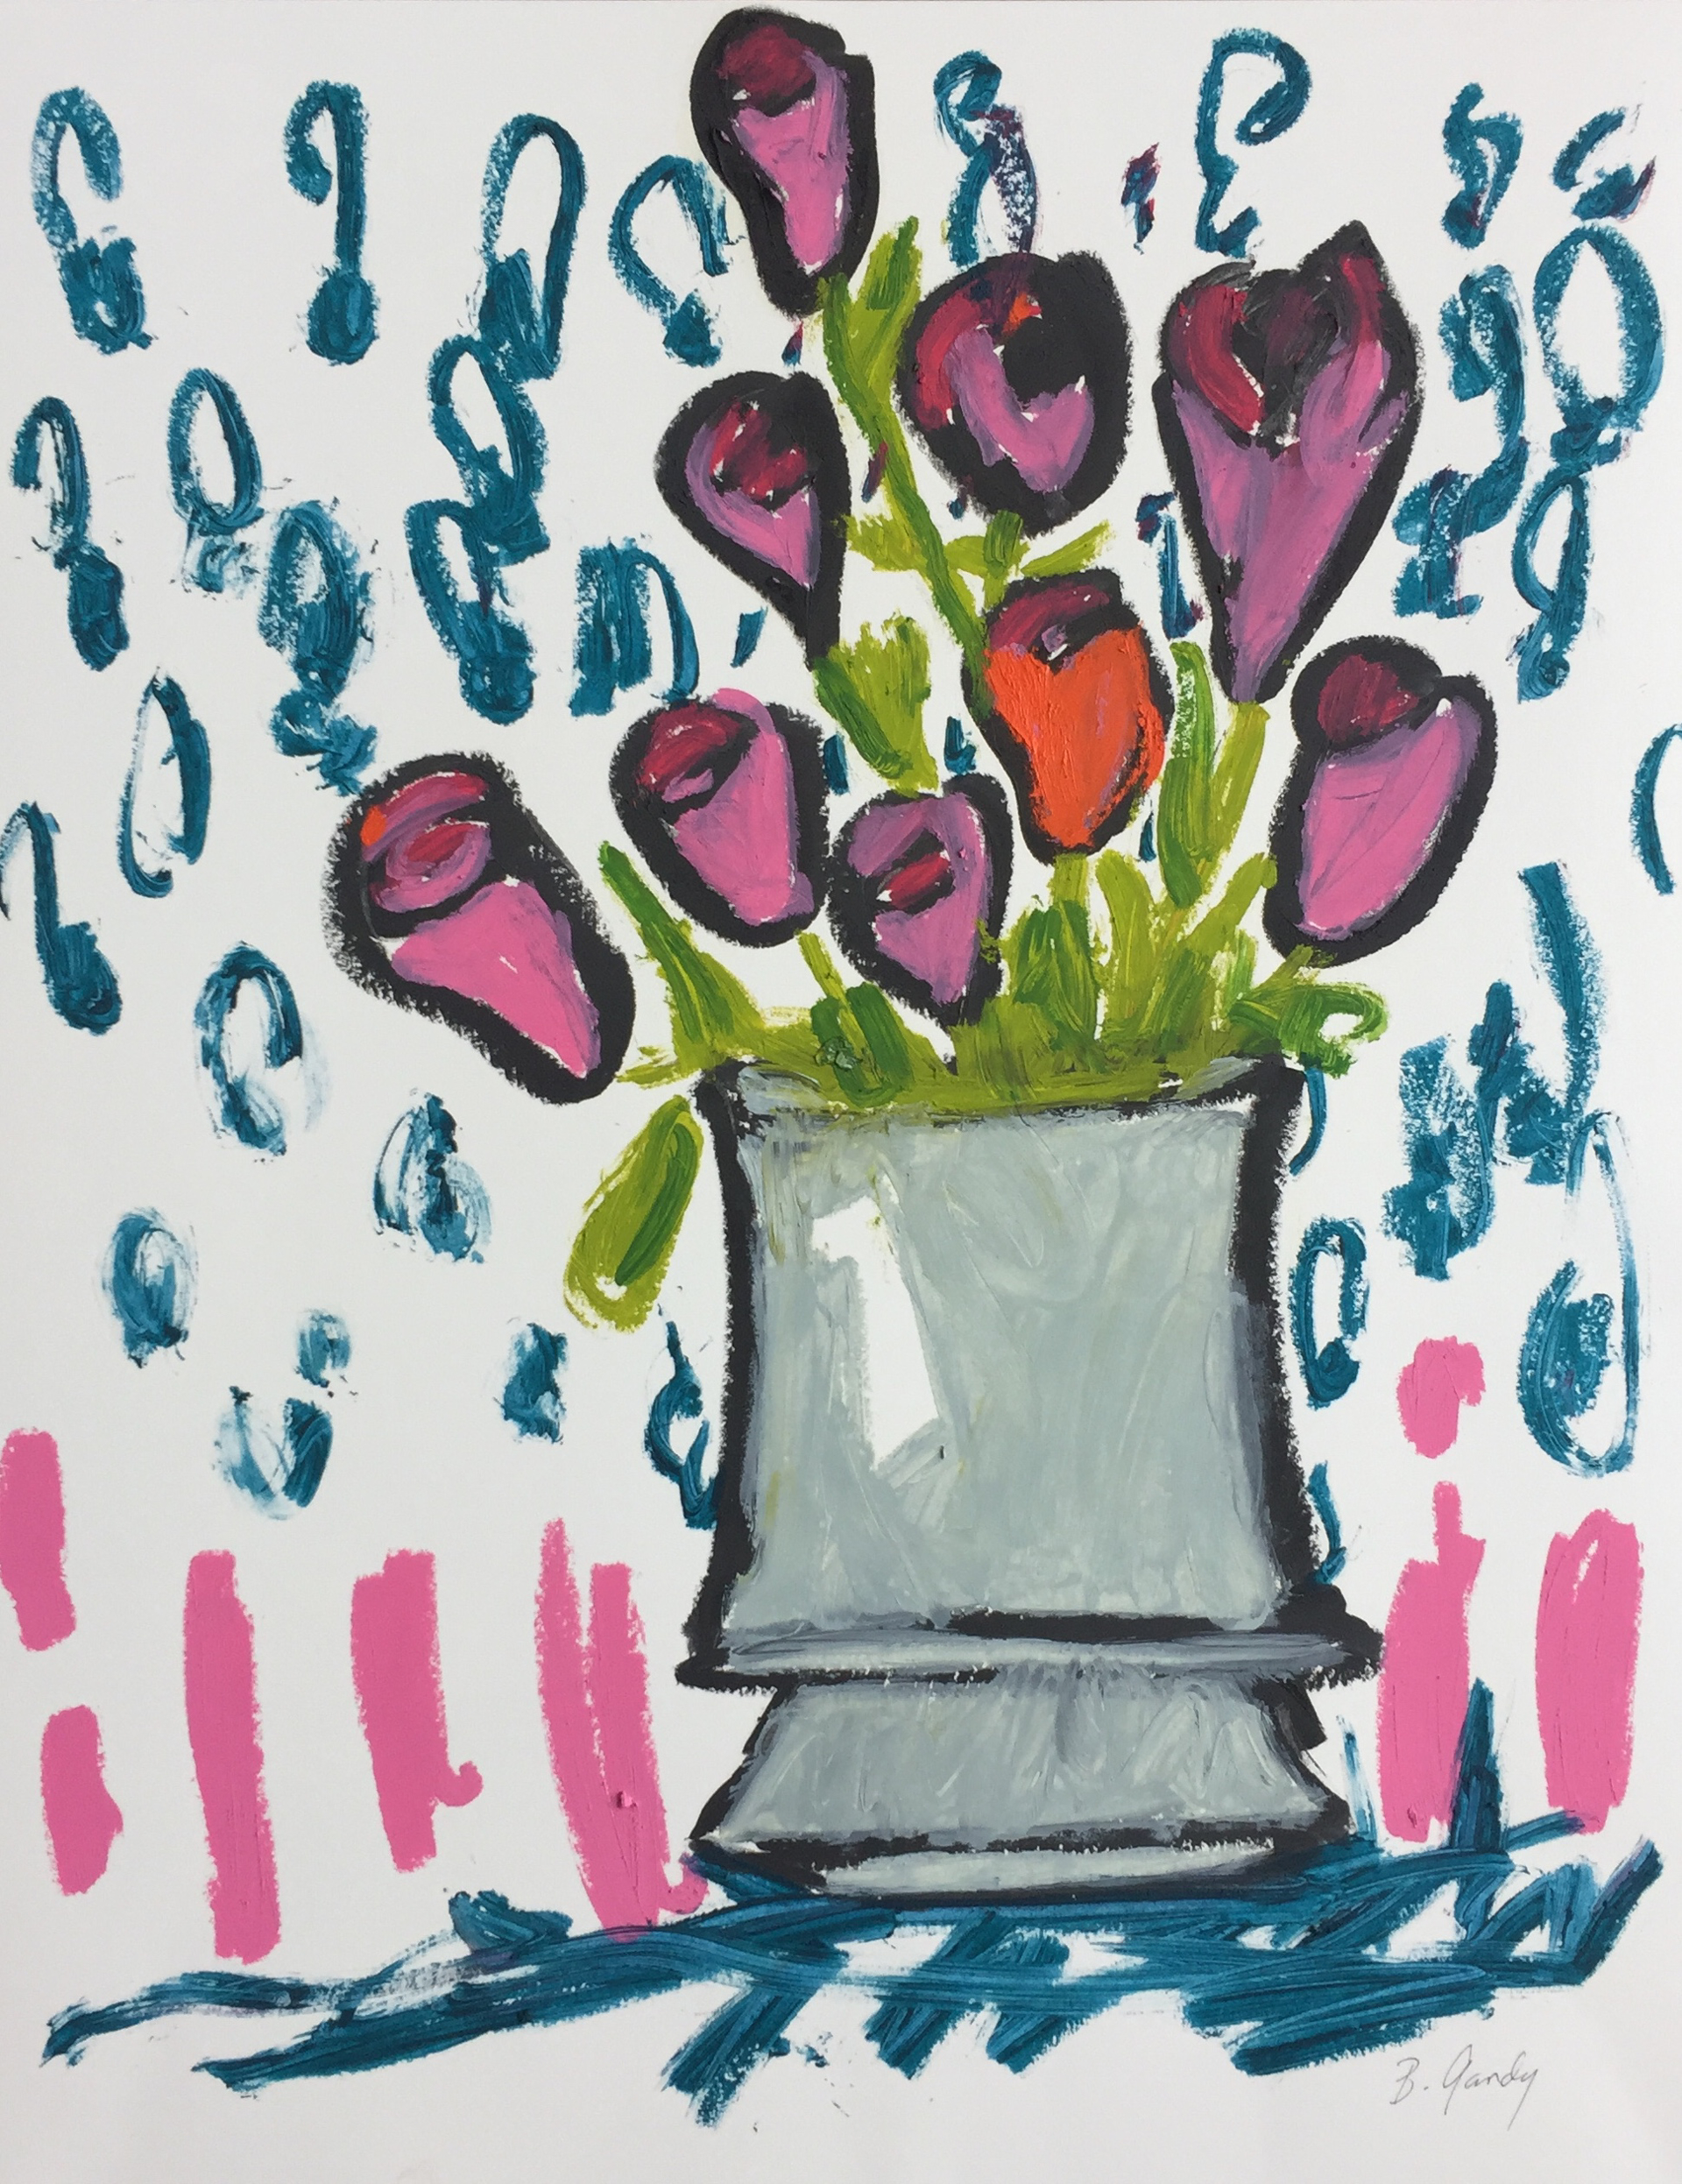 Flower Sketch #1 by Beth Gandy